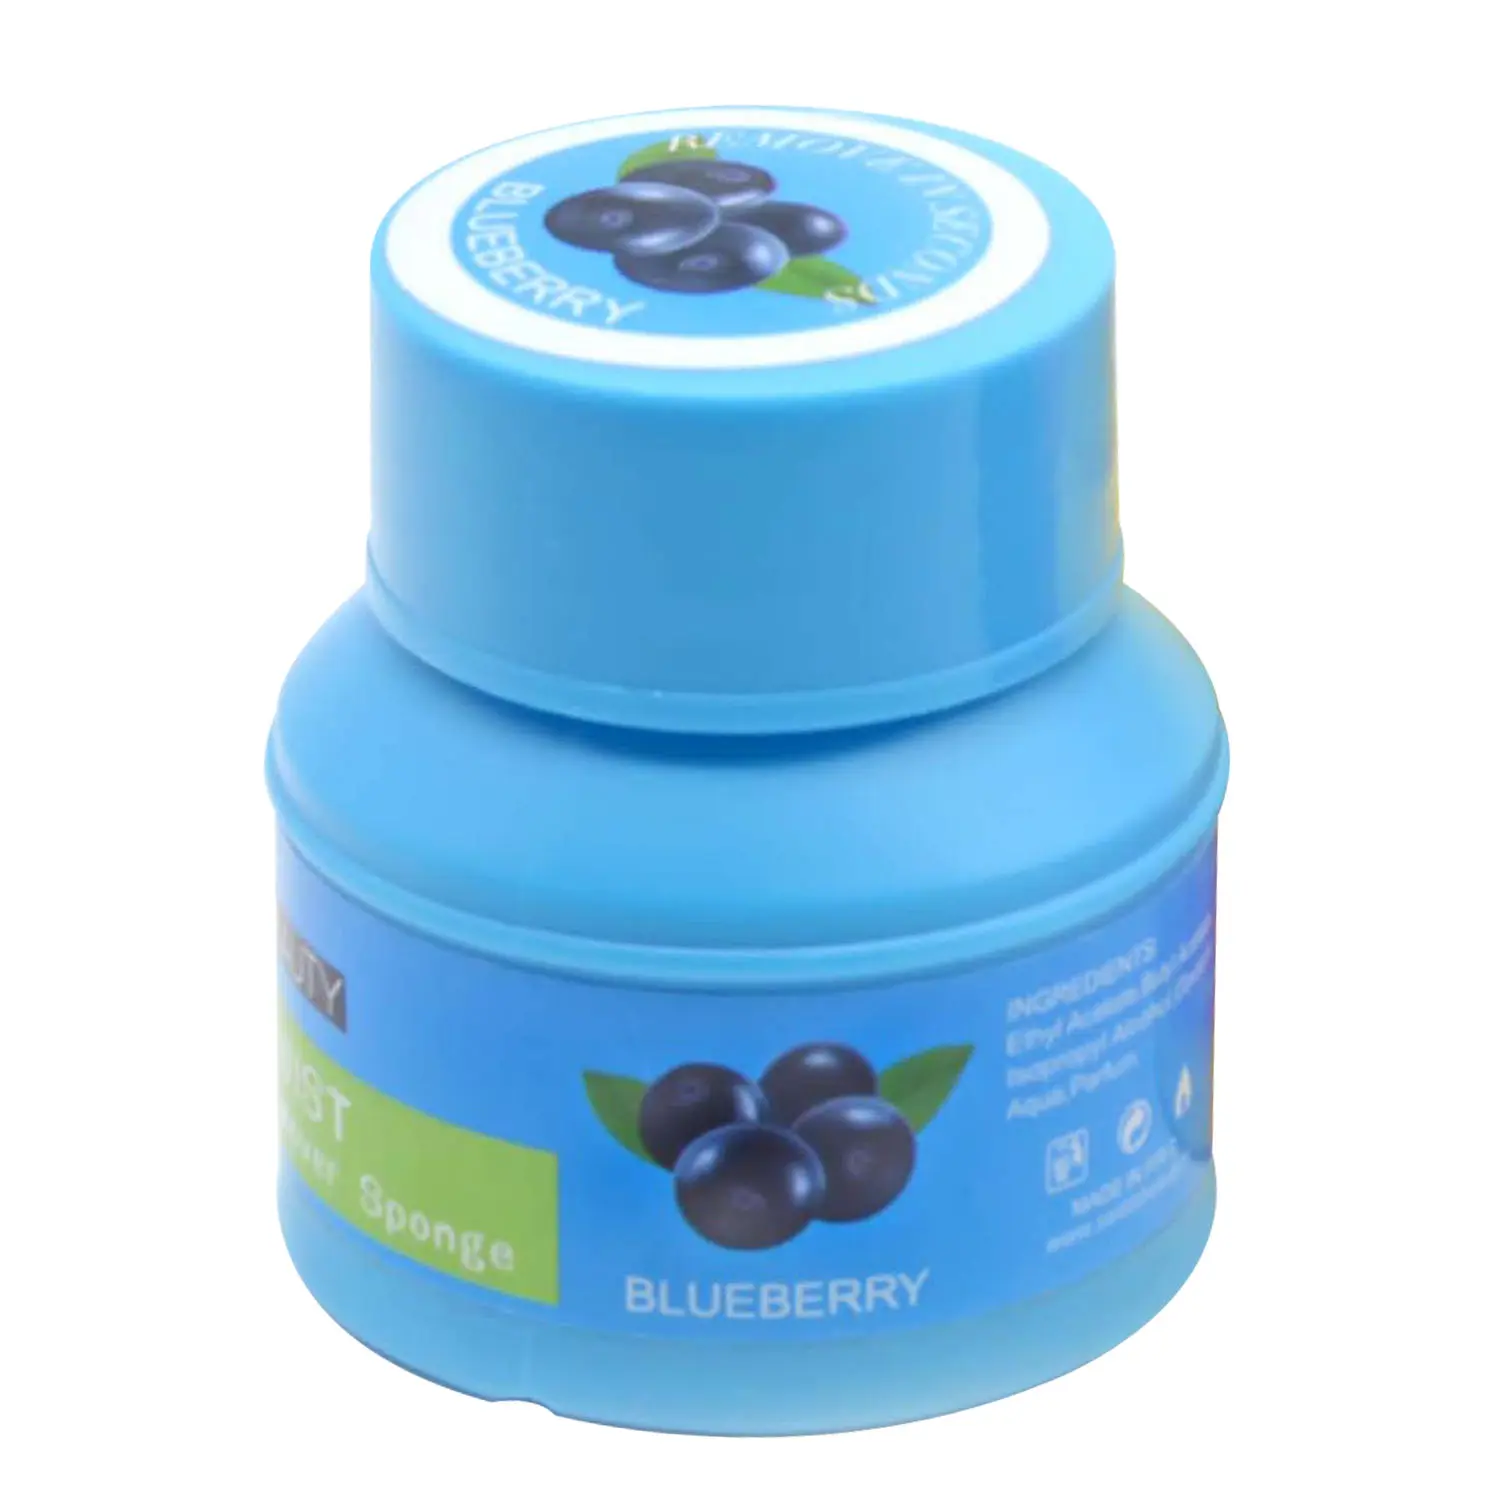 Swiss Beauty Dip & twist Nail Polish Remover - Blueberry (30 ml)